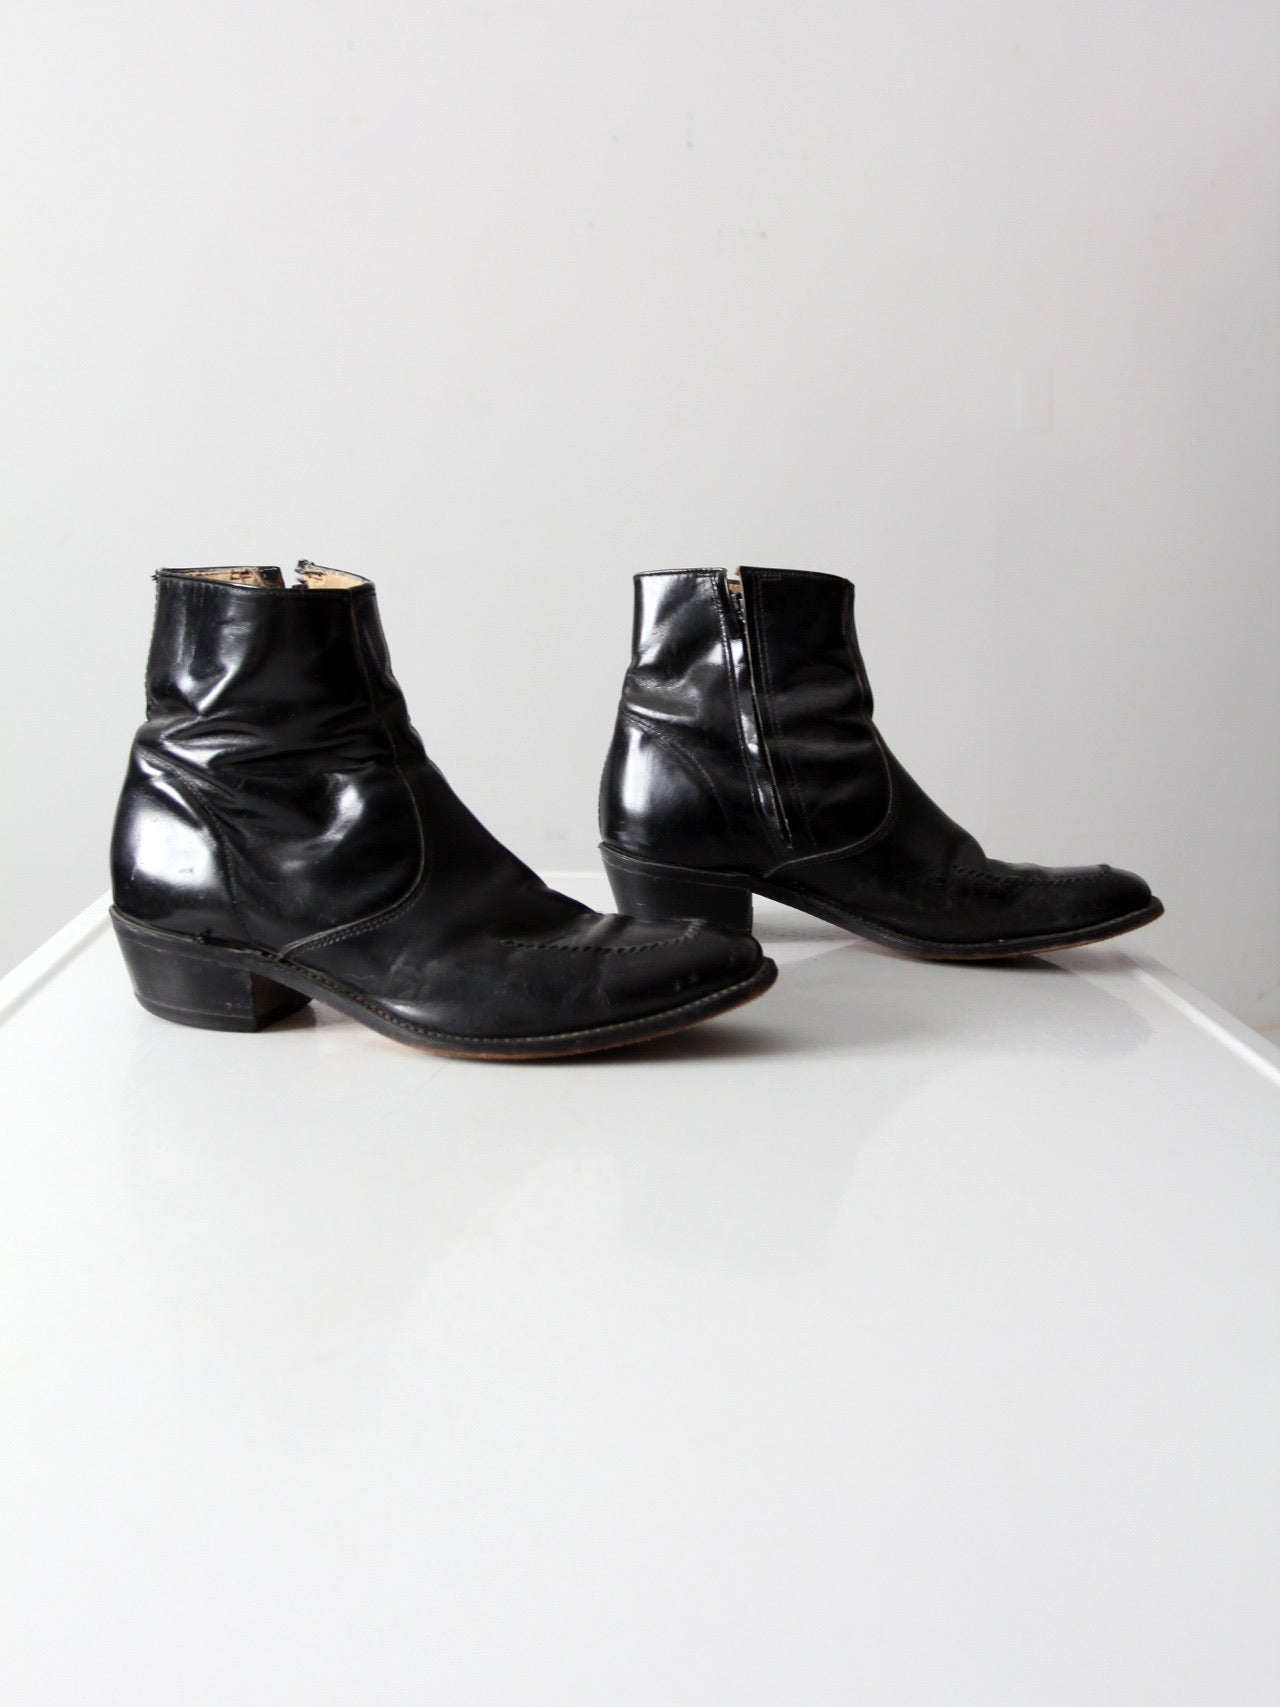 vintage black men's half boots